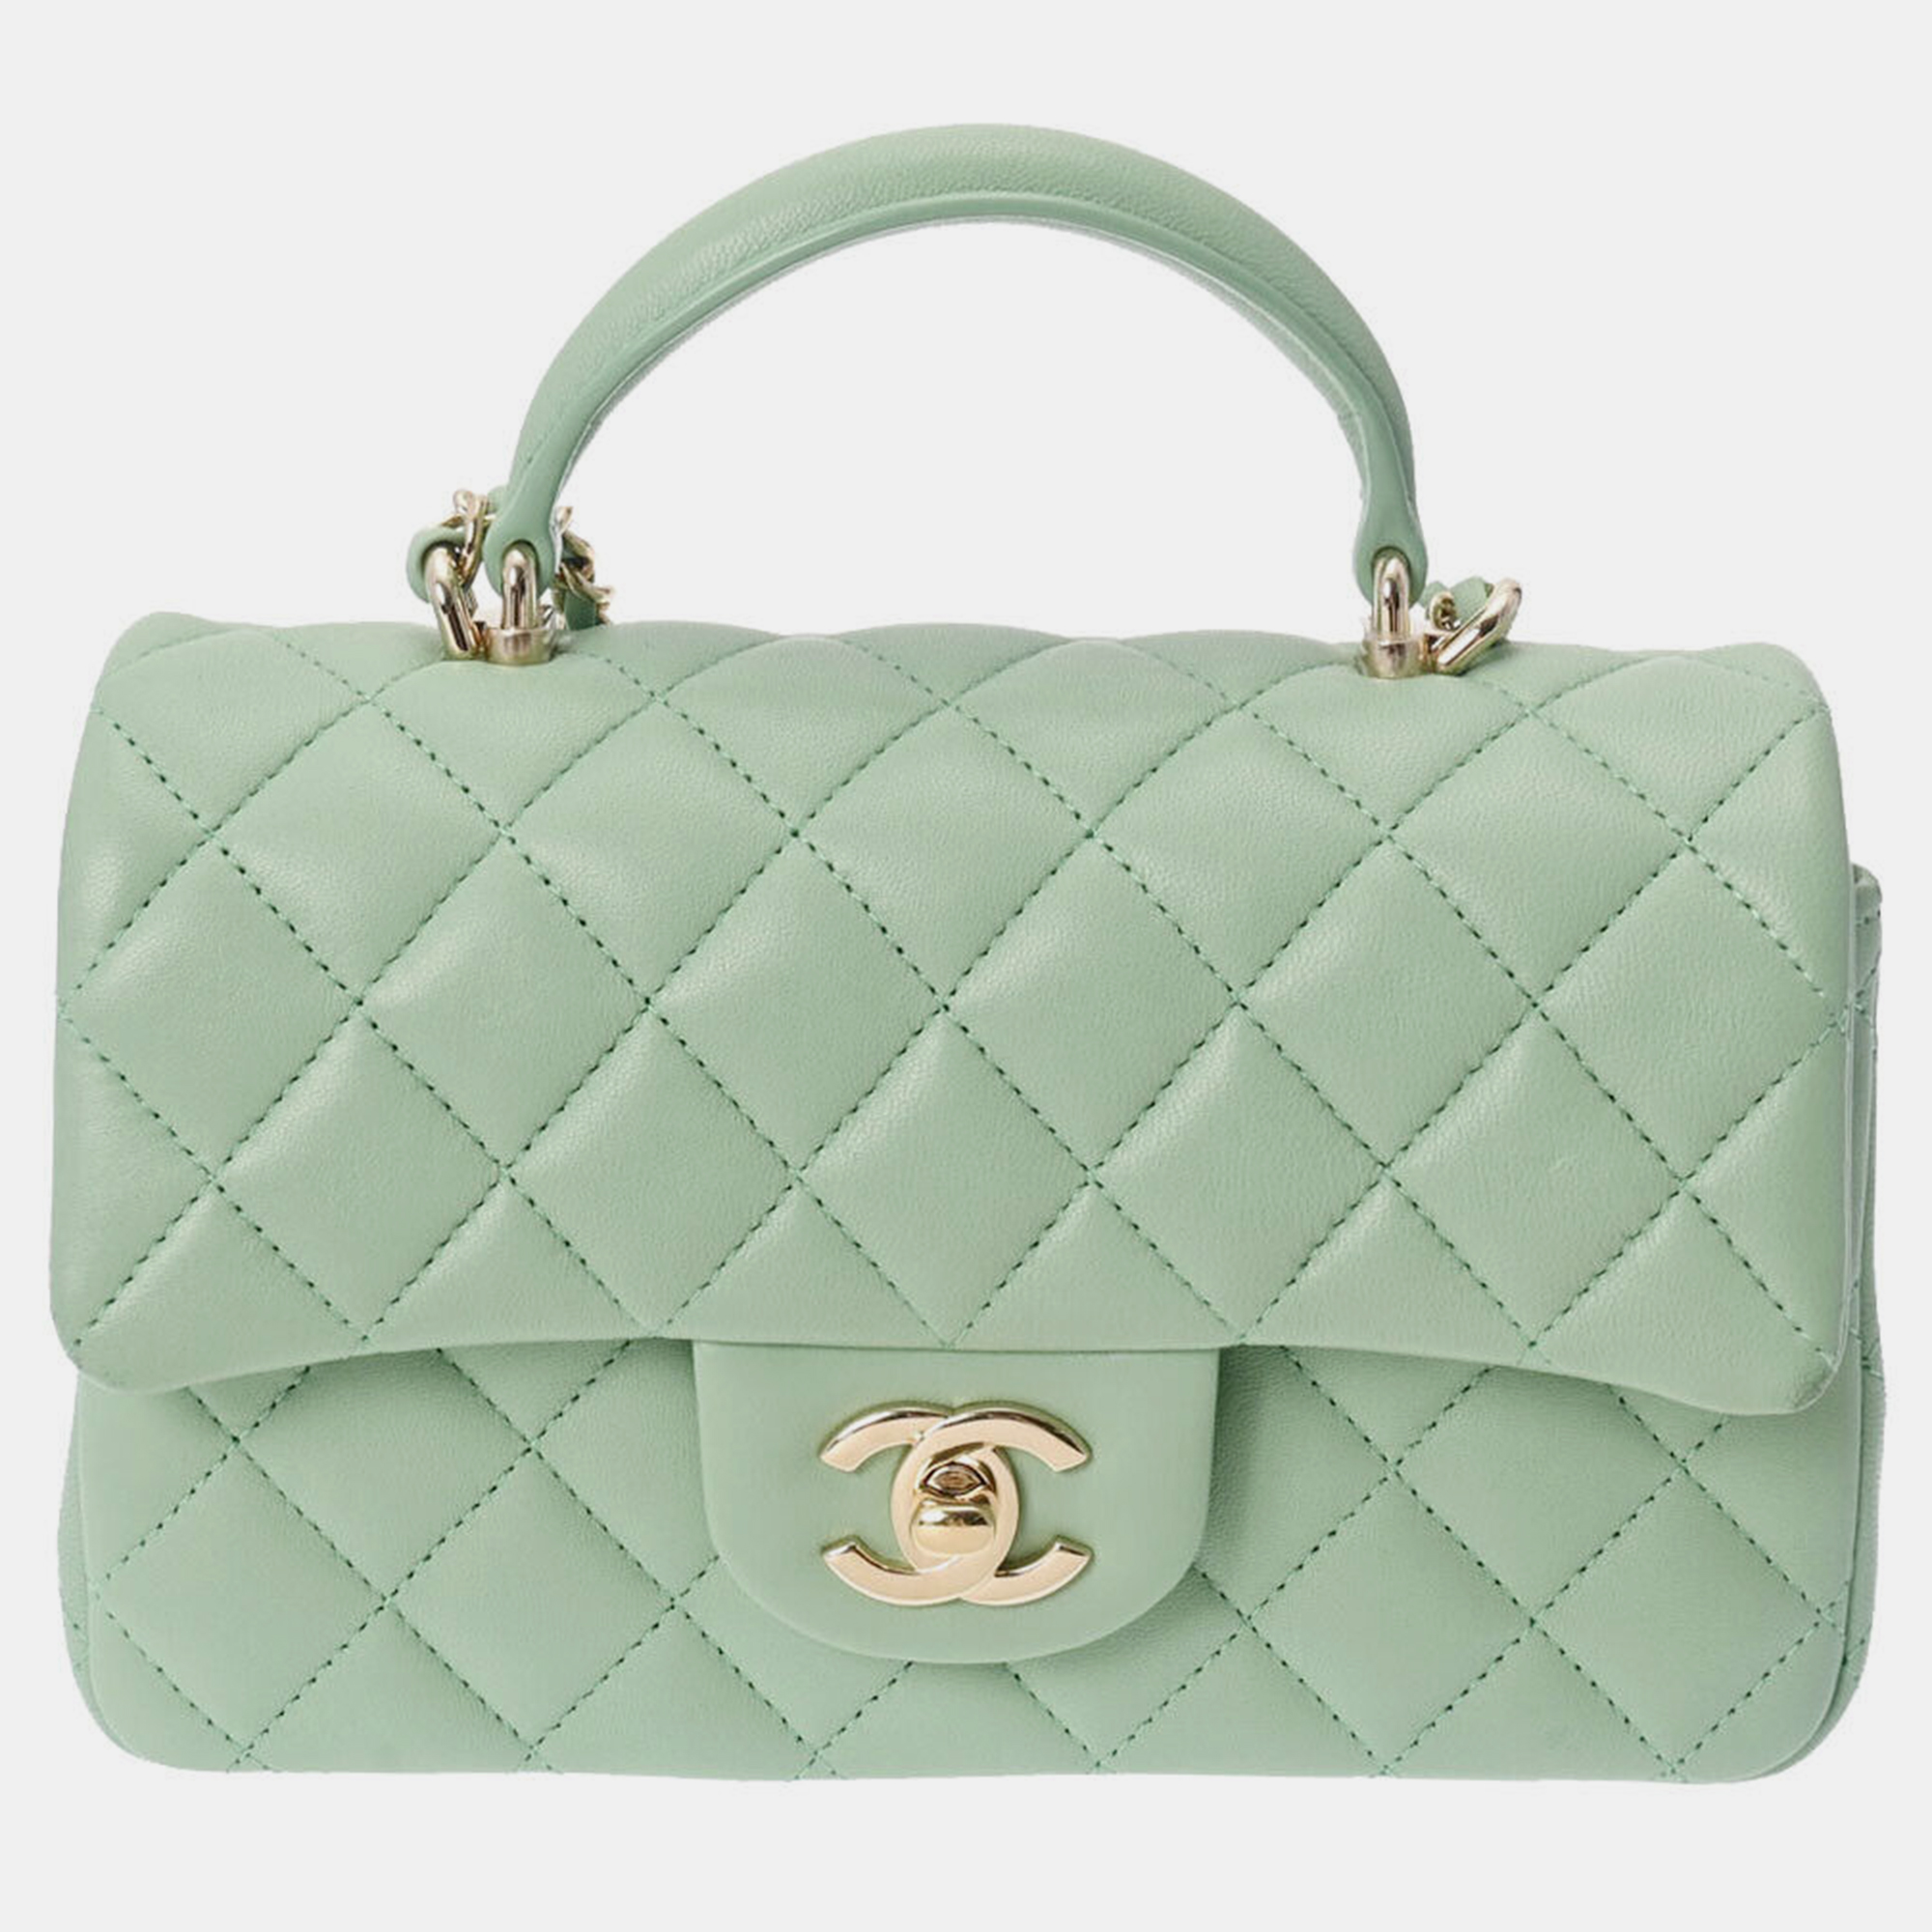 Chanel green mini flap top handle bag